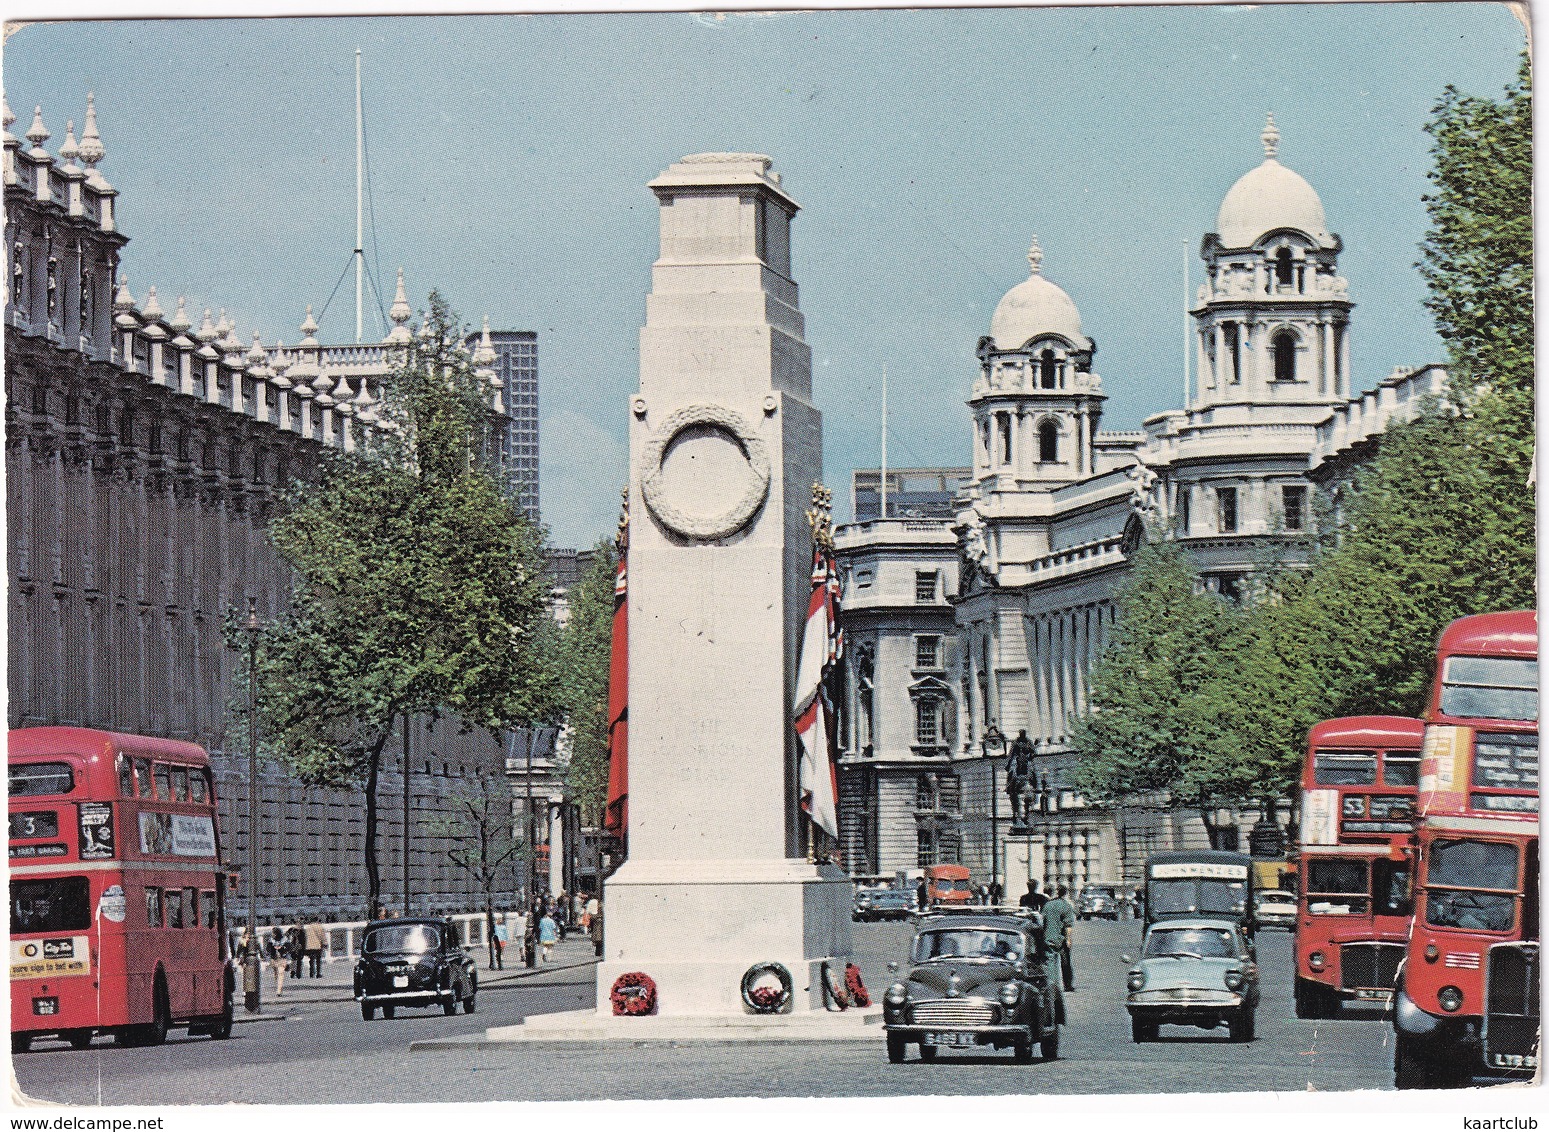 London: MORRIS MINOR, FORD ANGLIA, AUSTIN FX TAXI, DOUBLE DECK BUSES - Cenotaph, Whitehall - Toerisme